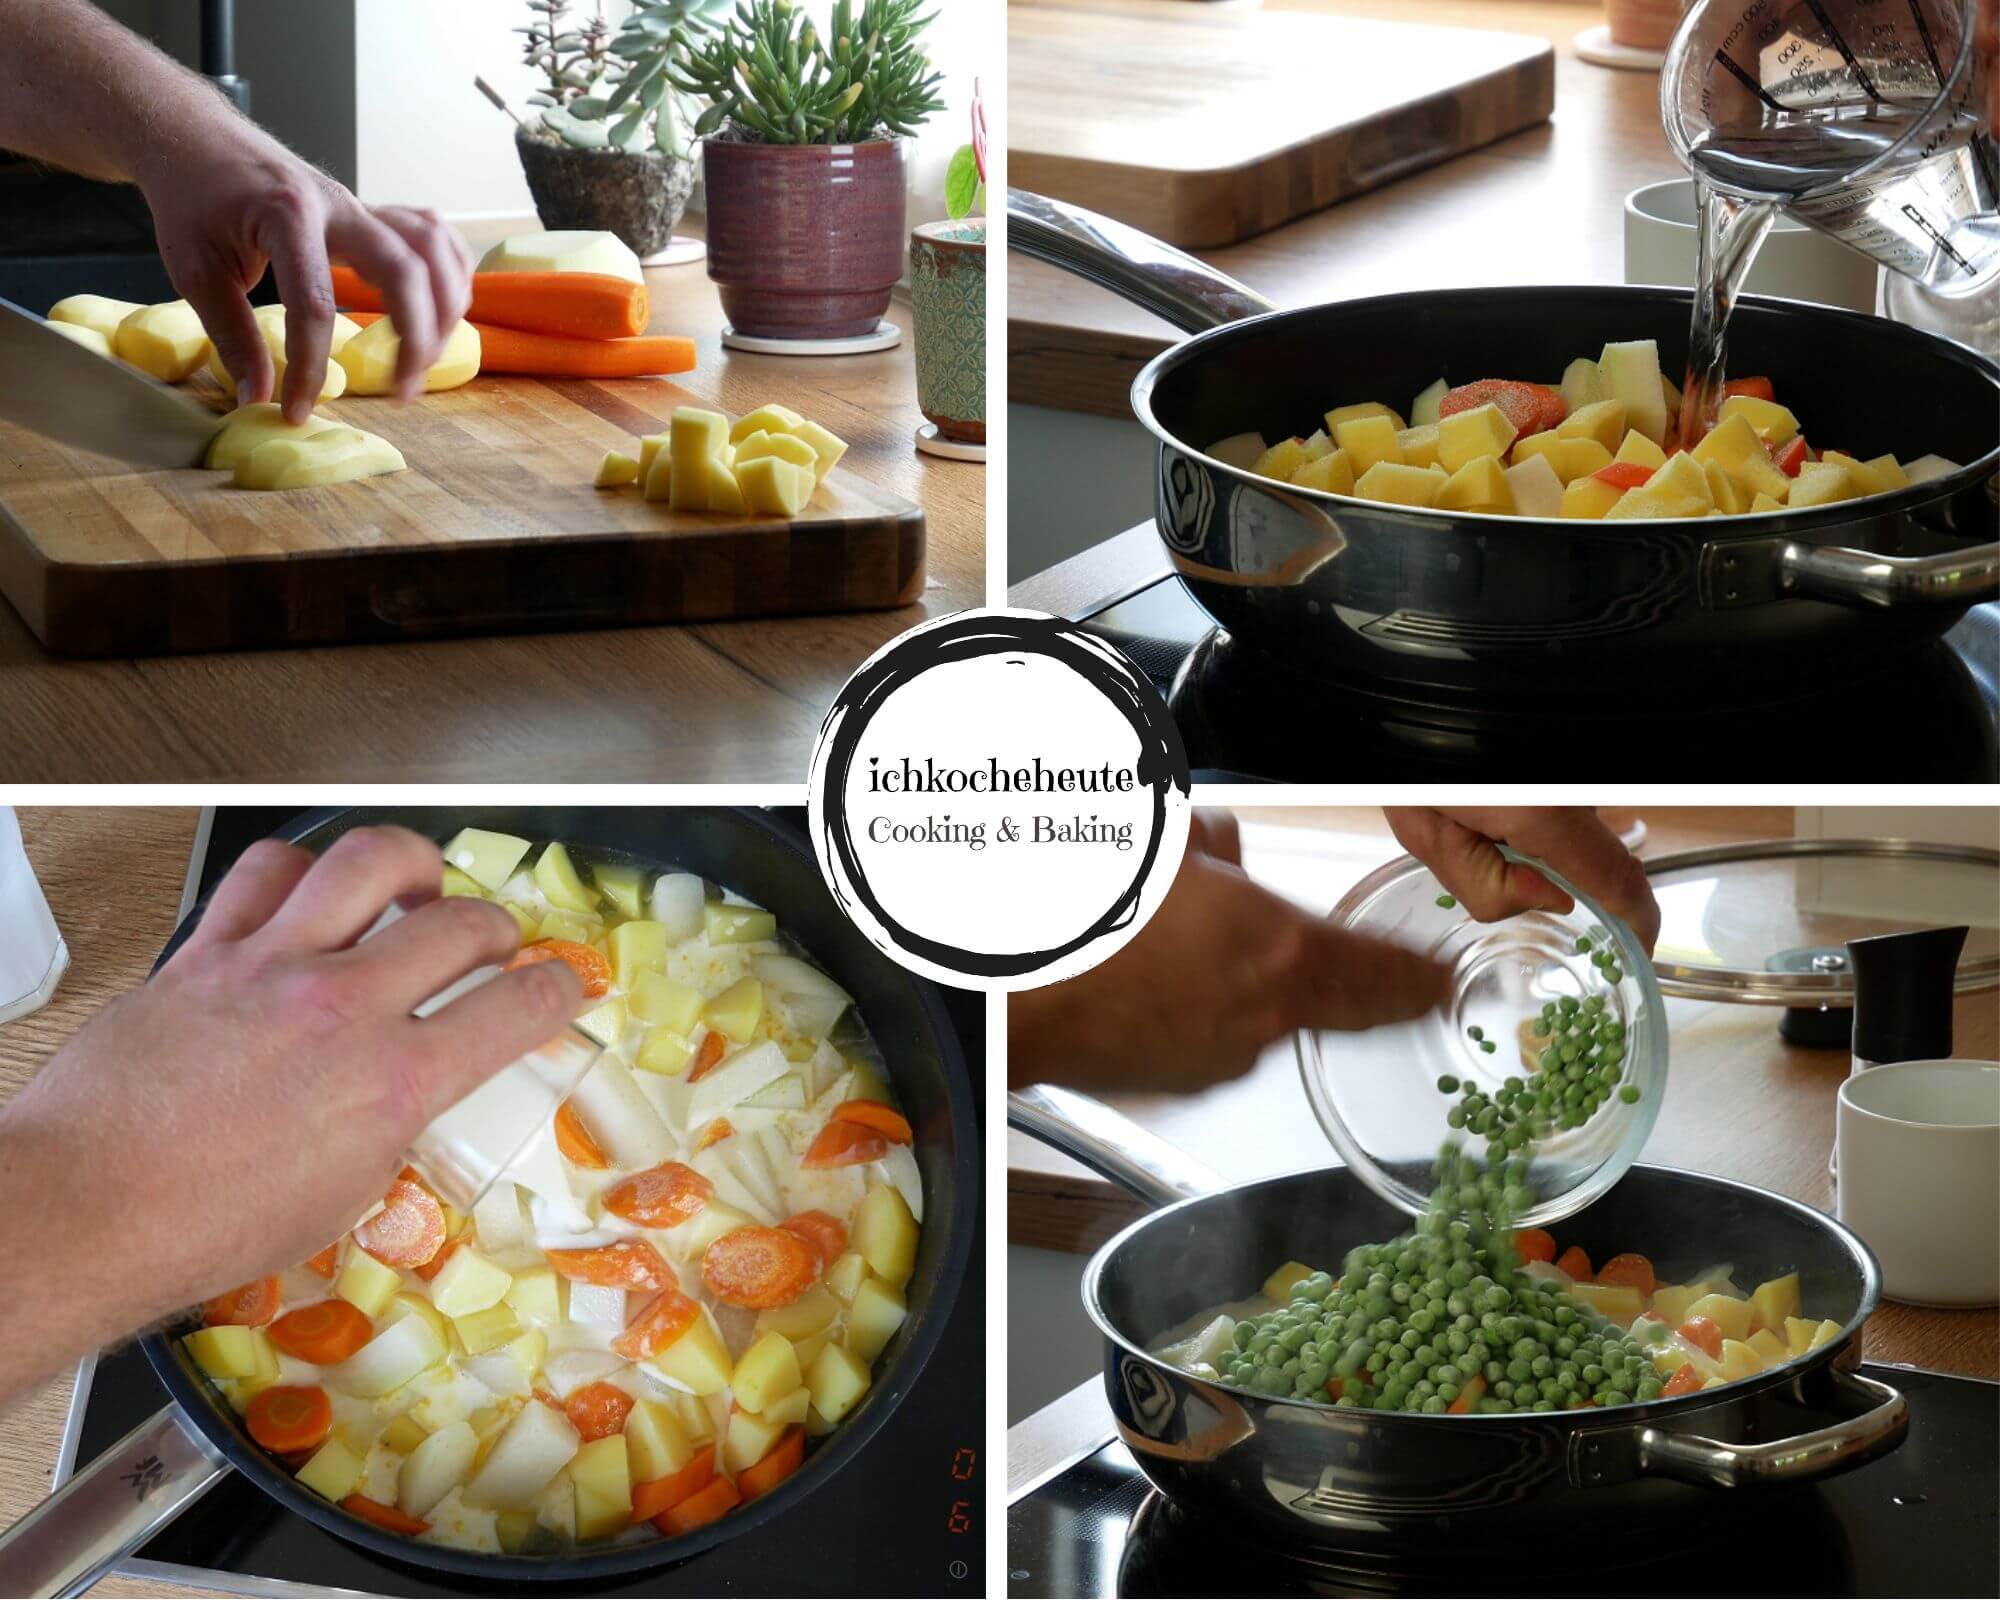 Preparations & Cooking Simple Potato Stiry Fry with Carrots, Kohlrabi & Peas